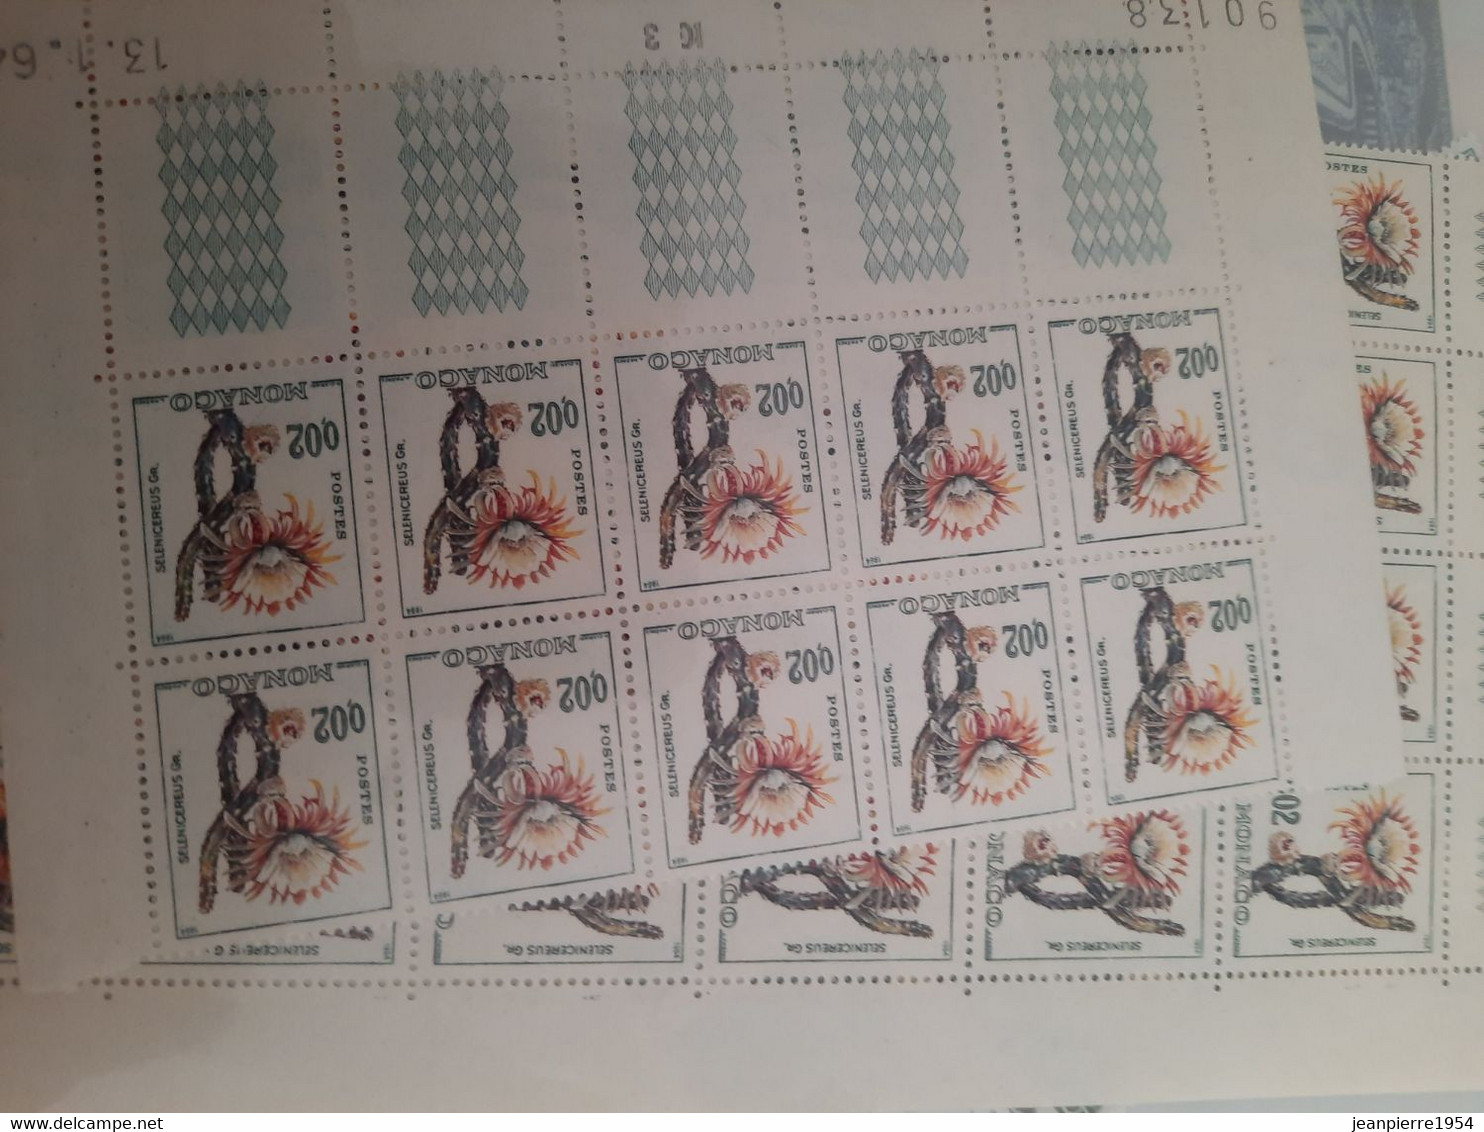 anciens timbres monaco neufxxx